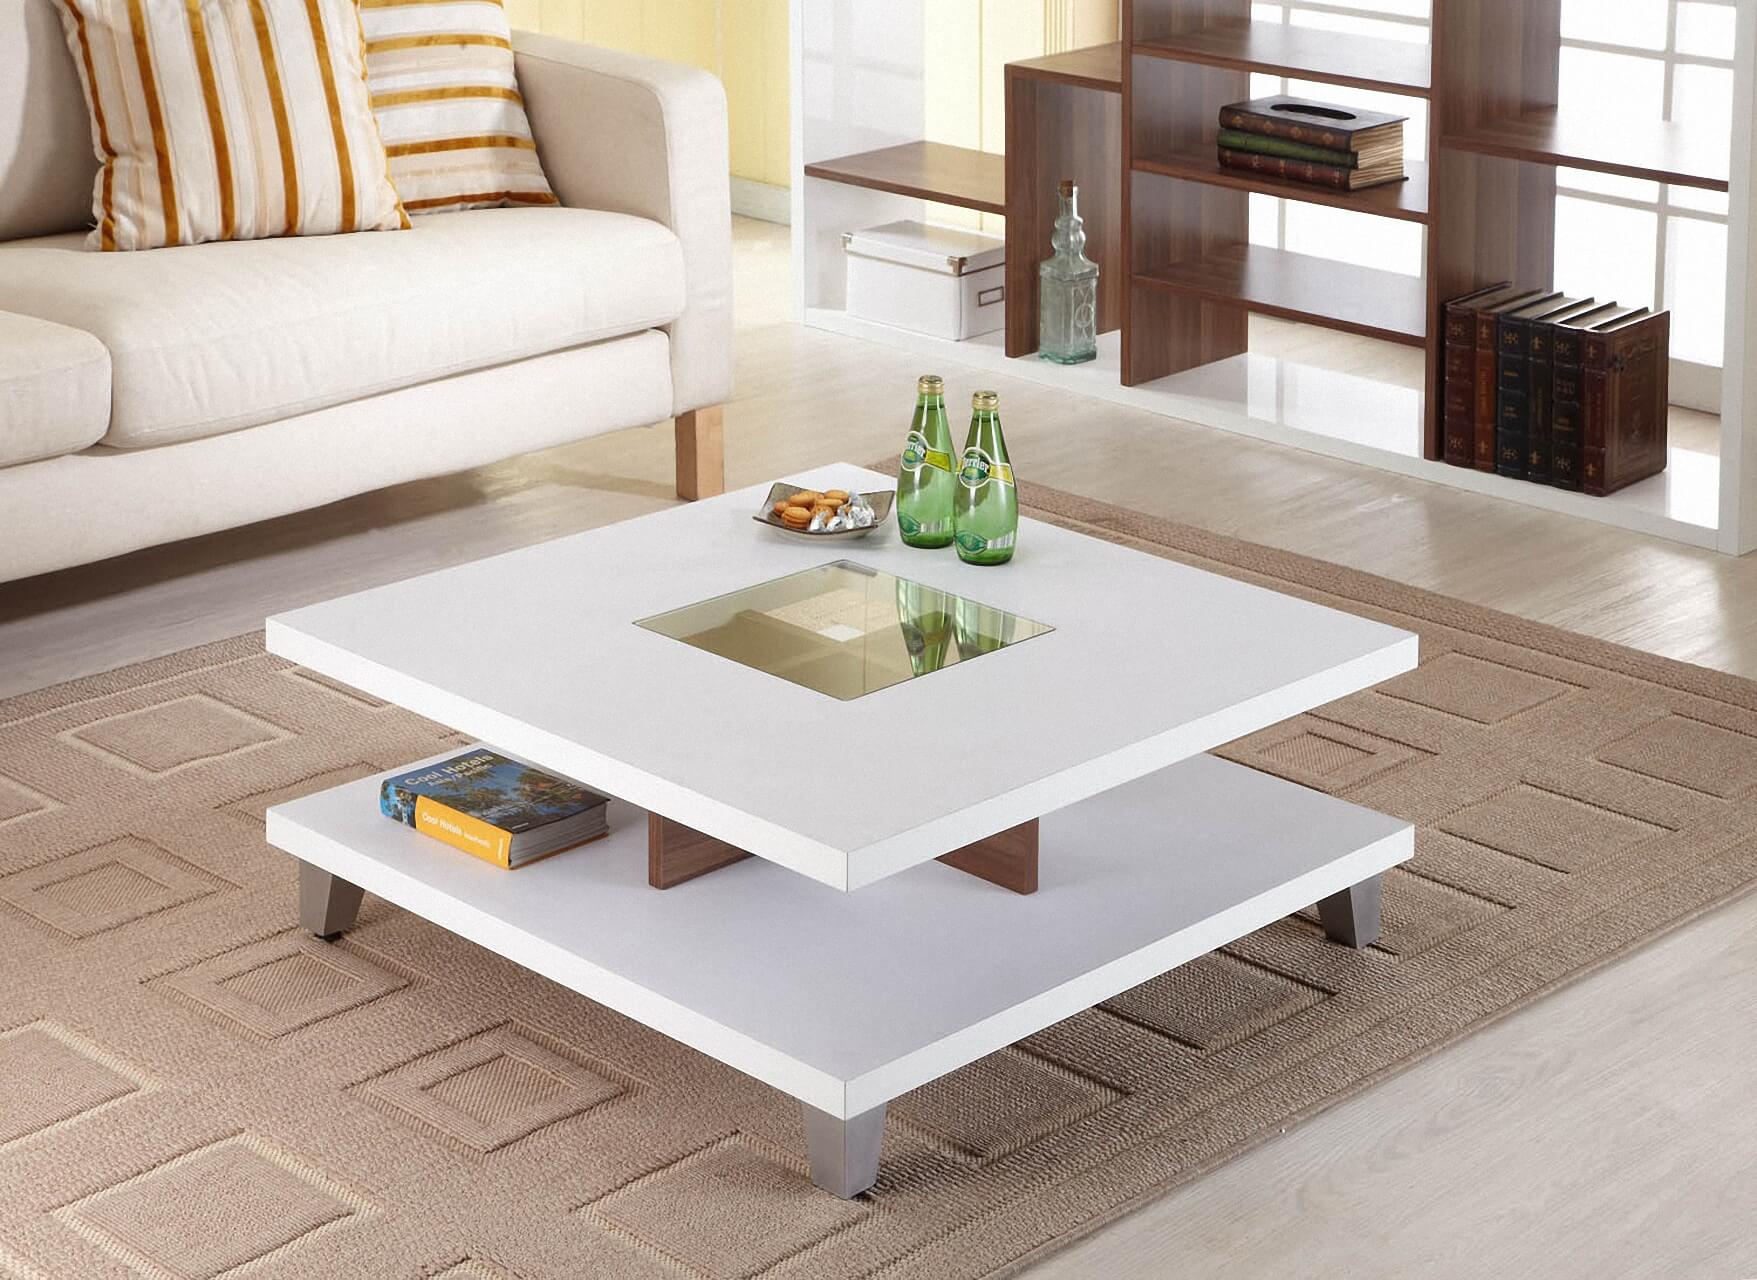 living room wooden center table design